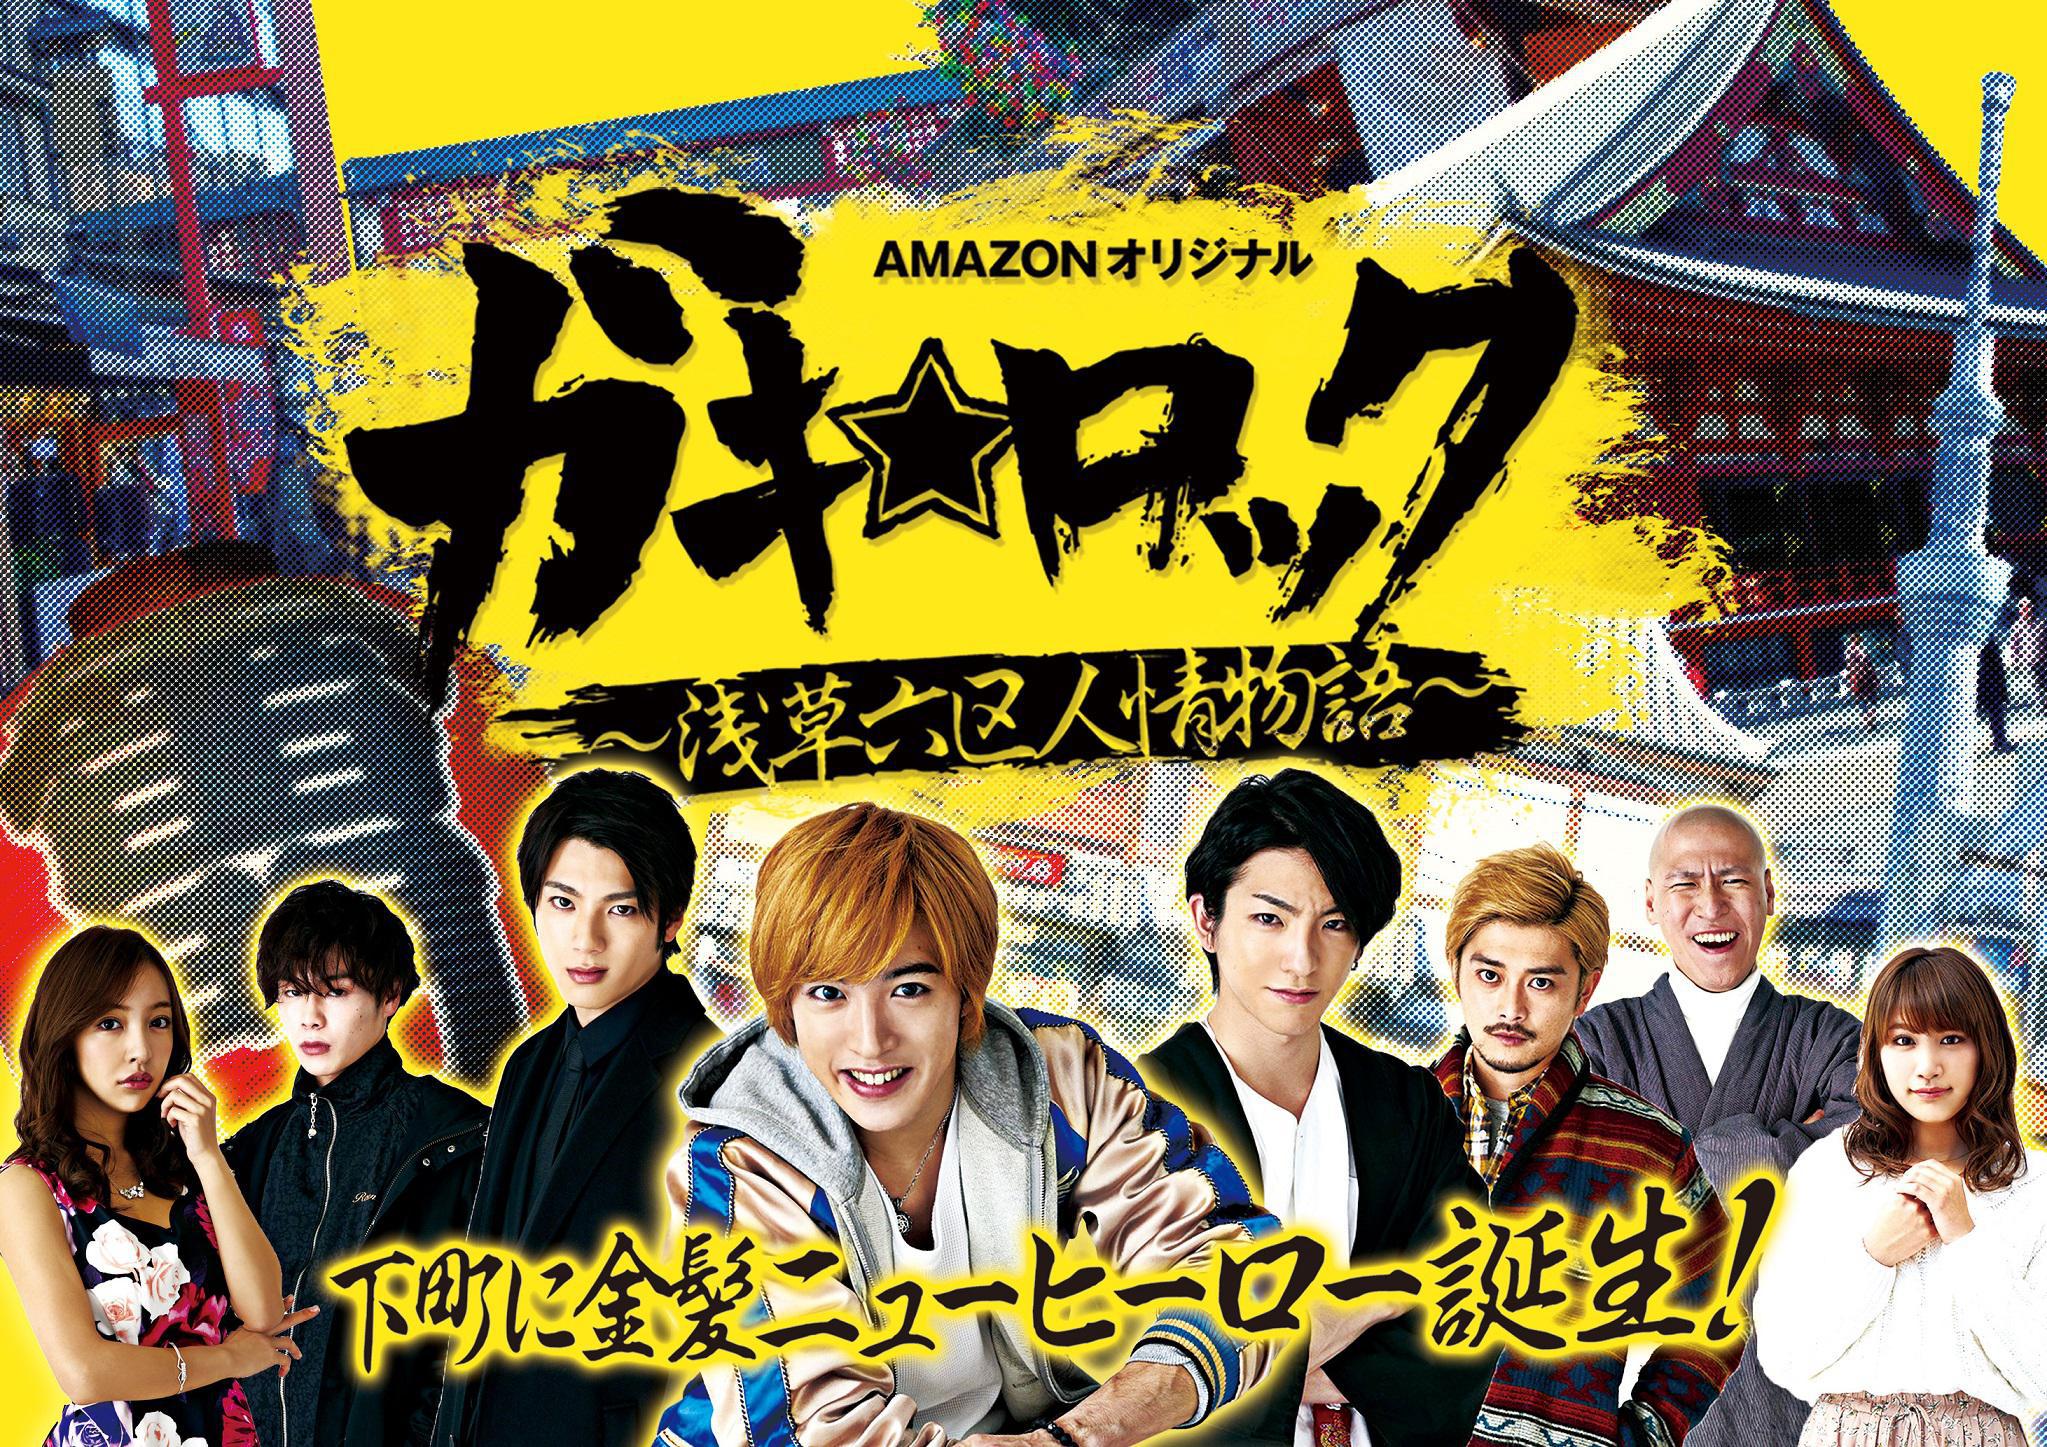 TV ratings for Gaki Rock: Asakusa Roku-ku Ninjo Monogatari in Argentina. Amazon Prime Video TV series